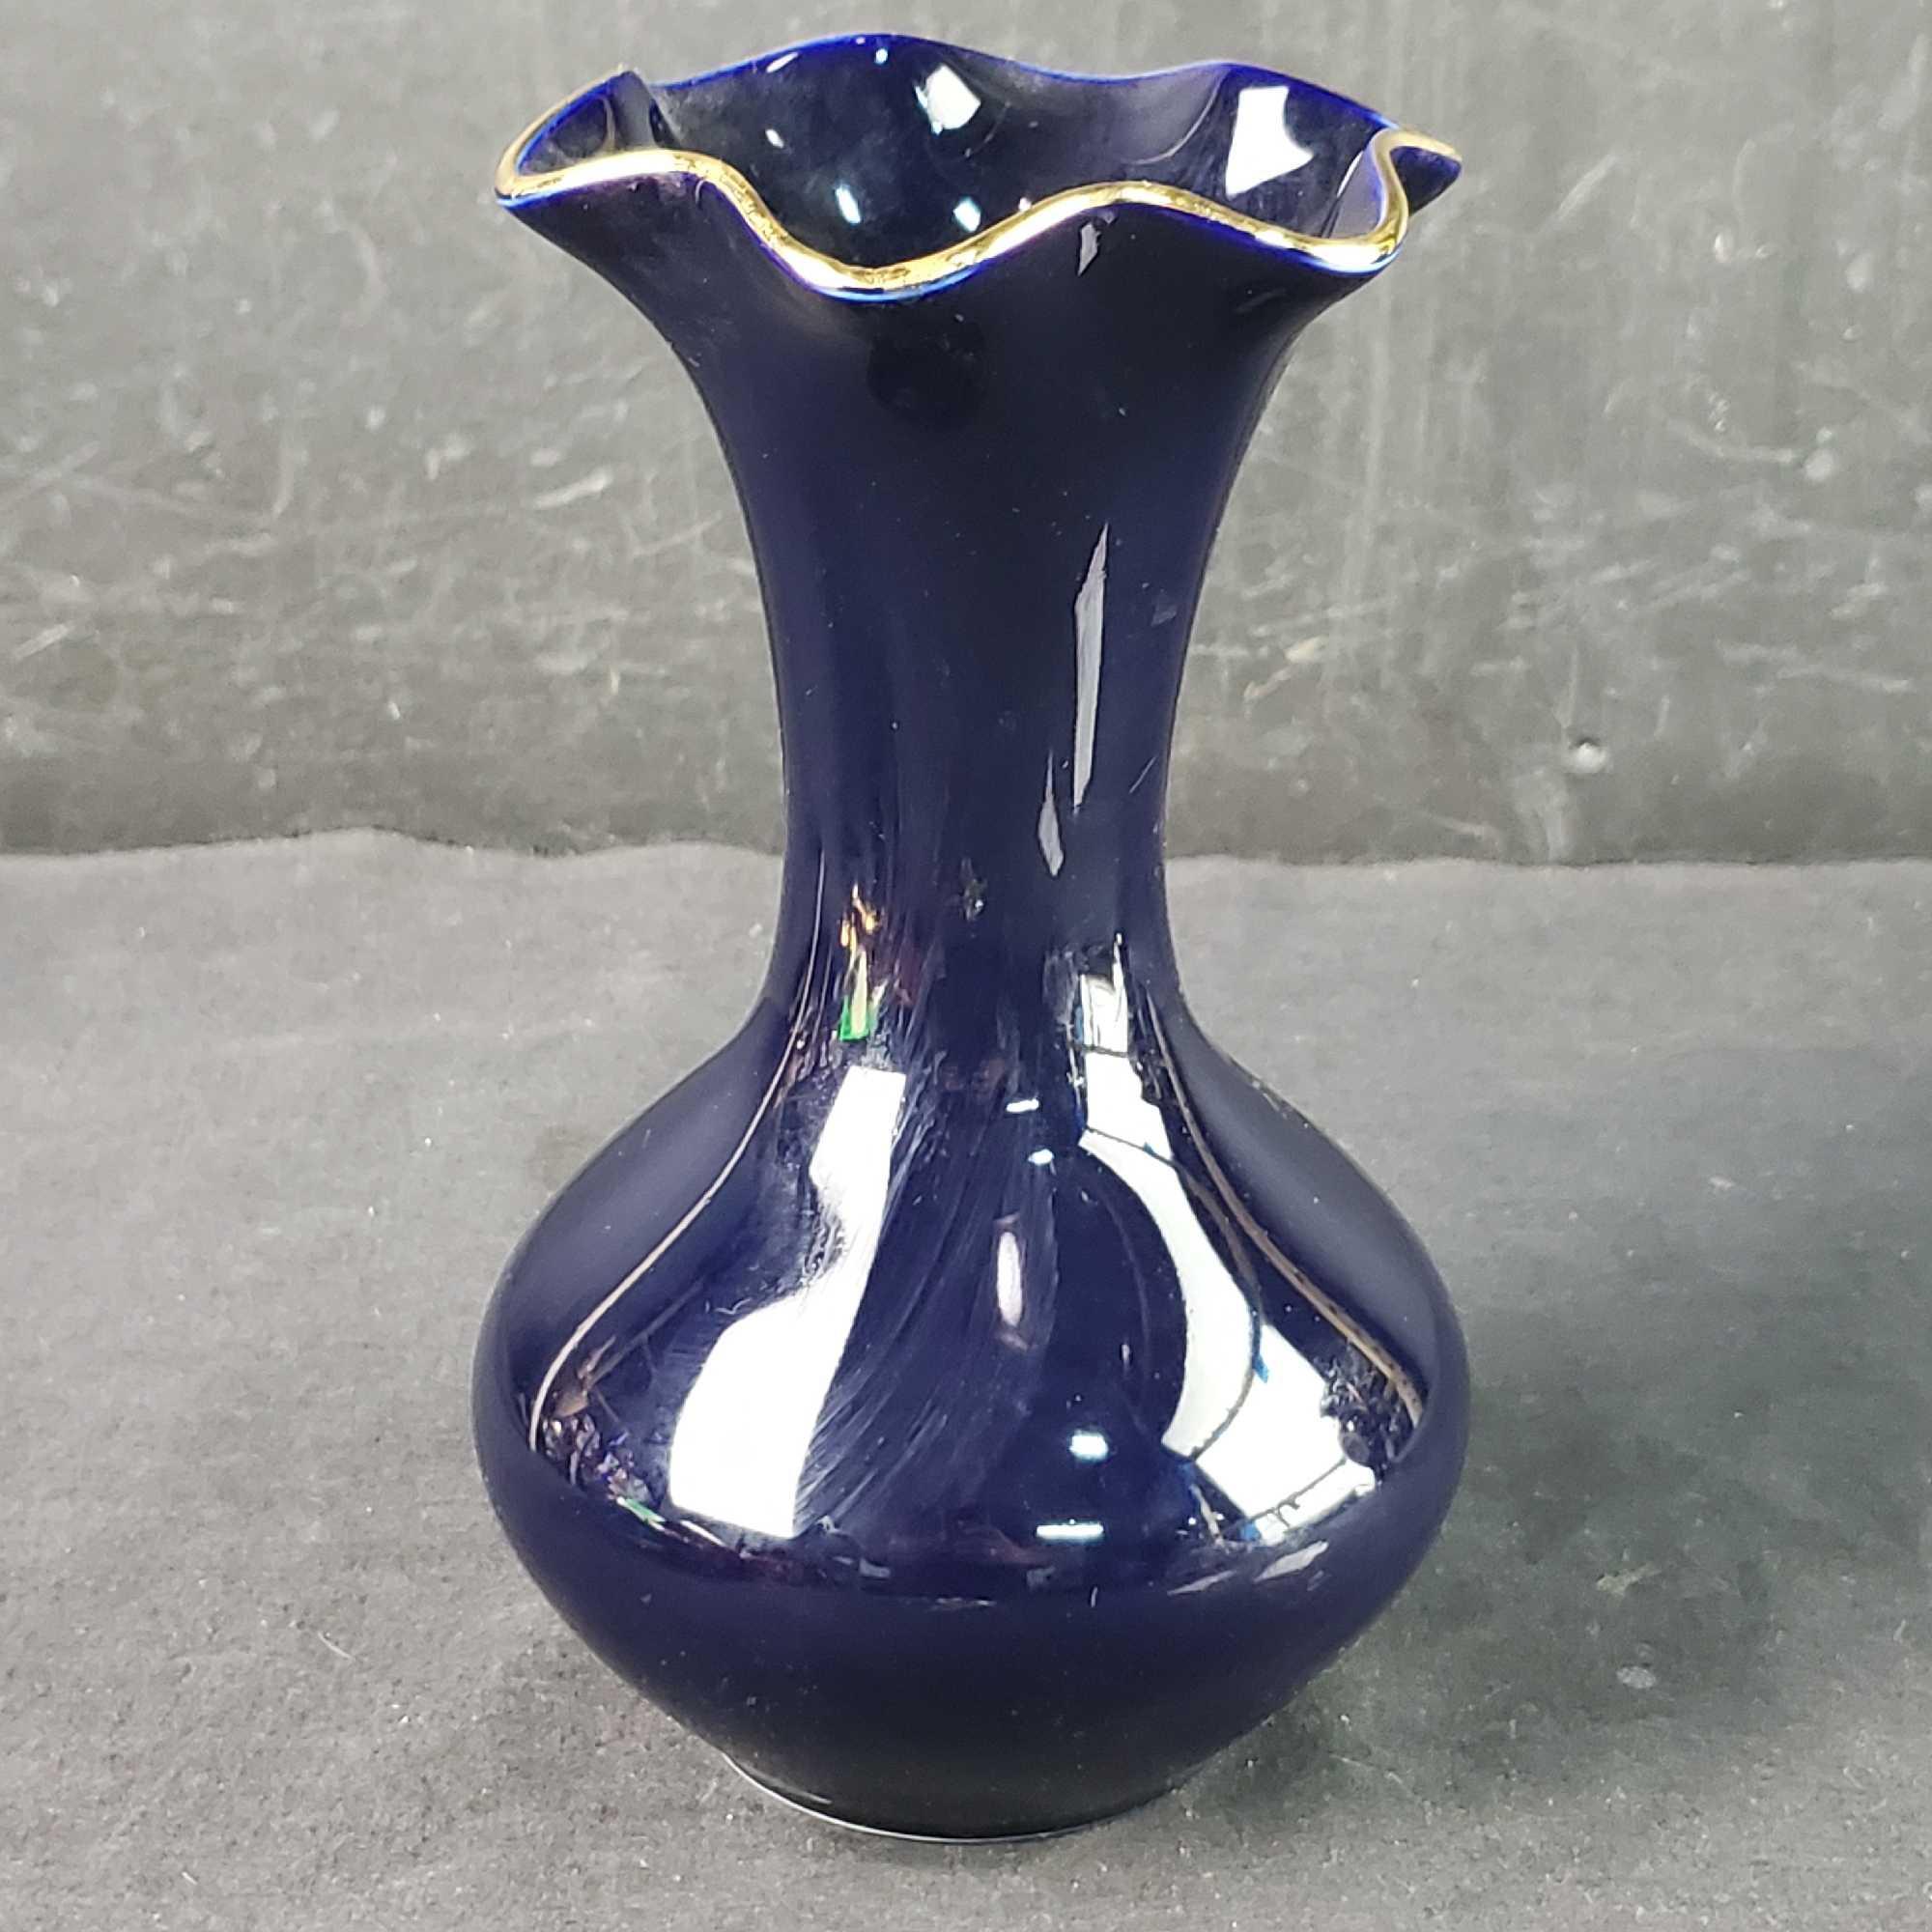 2 Vintage Limoges porcelain pieces Small pitcher Florence colbalt blue with gold trim